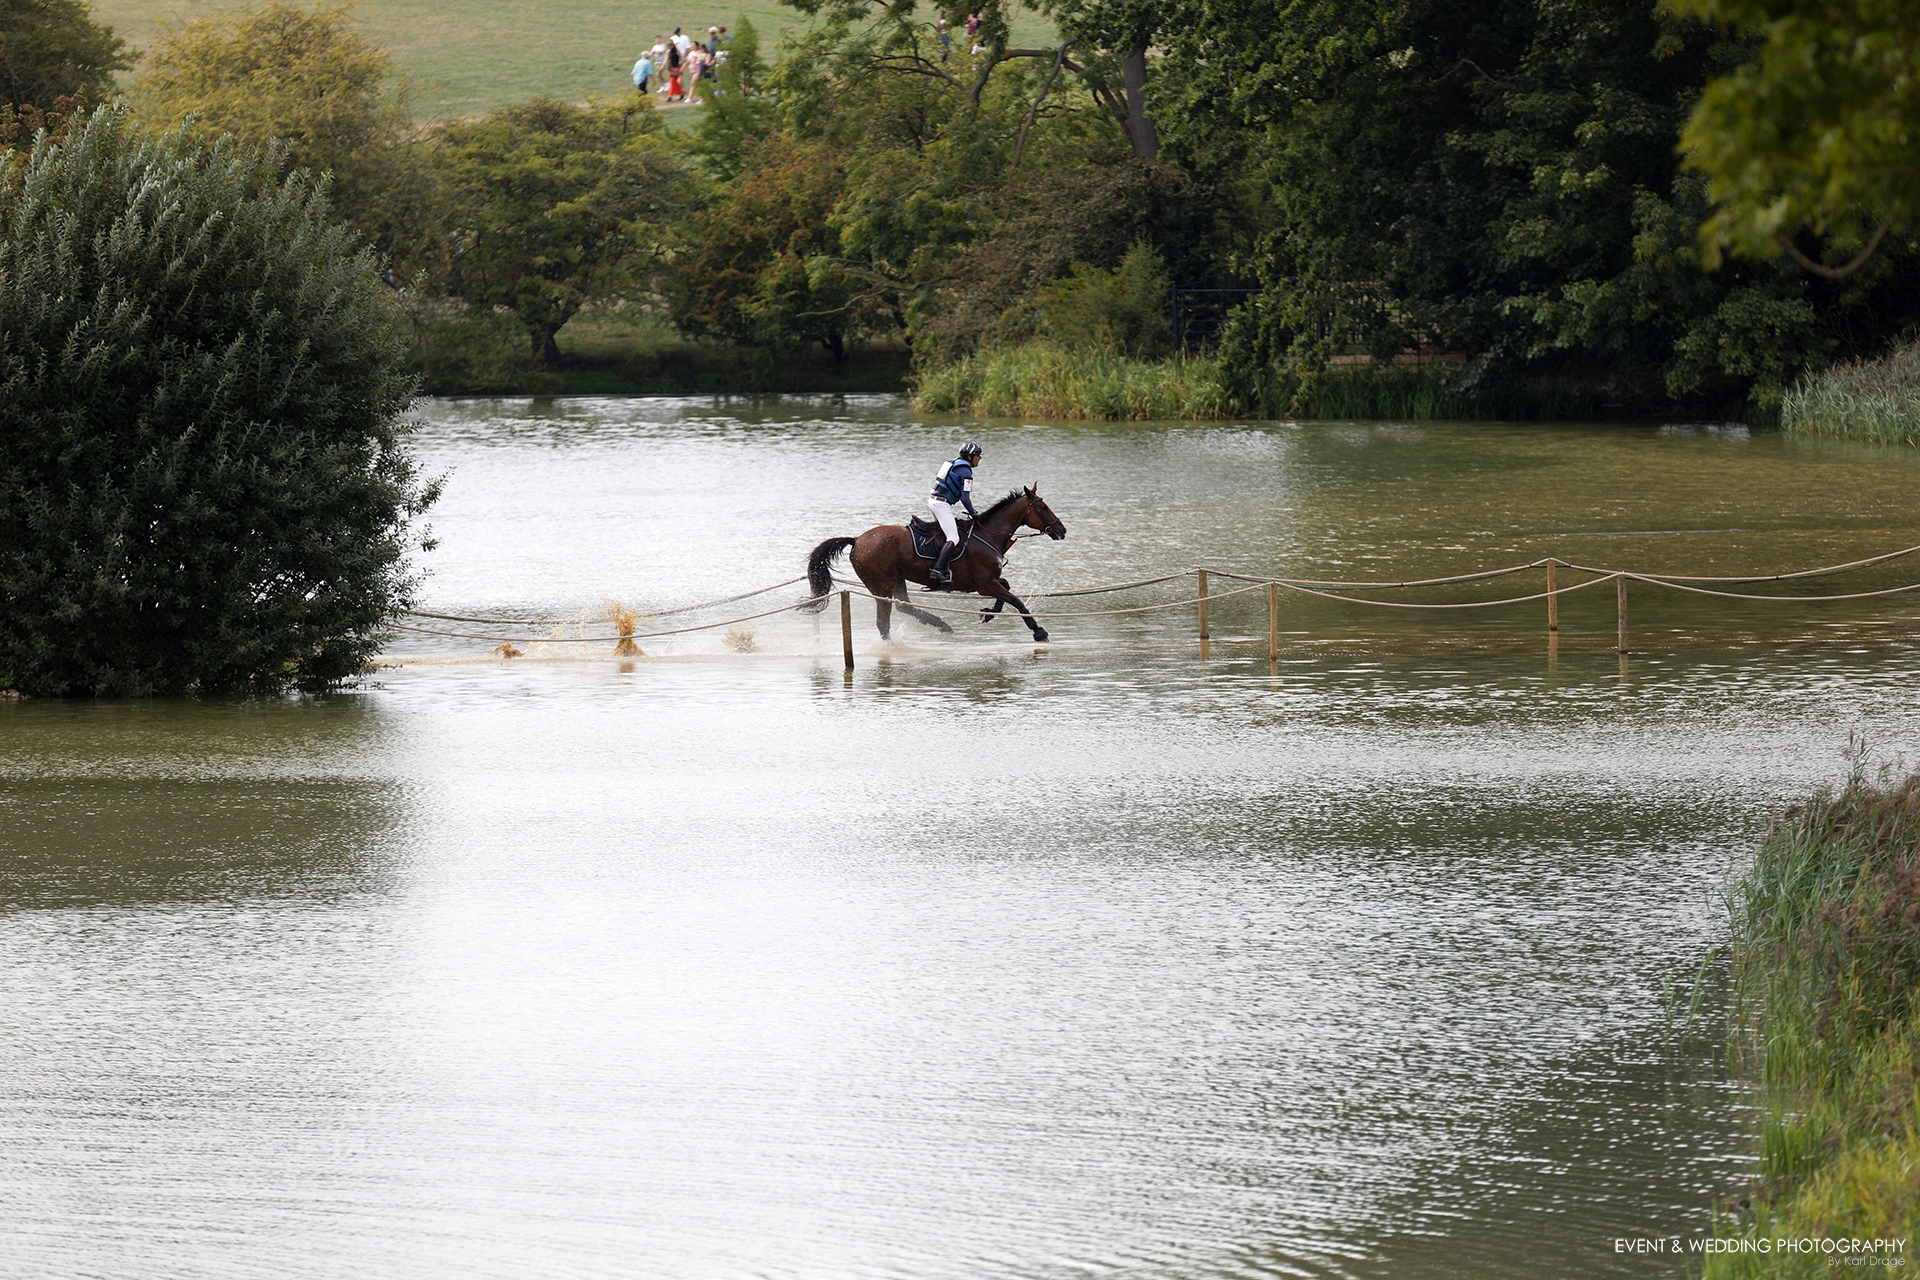 Cedric Lyard & Unum De'Or turn the corner splashing through the Boodles Raindance during the 2022 Burghley Horse Trials